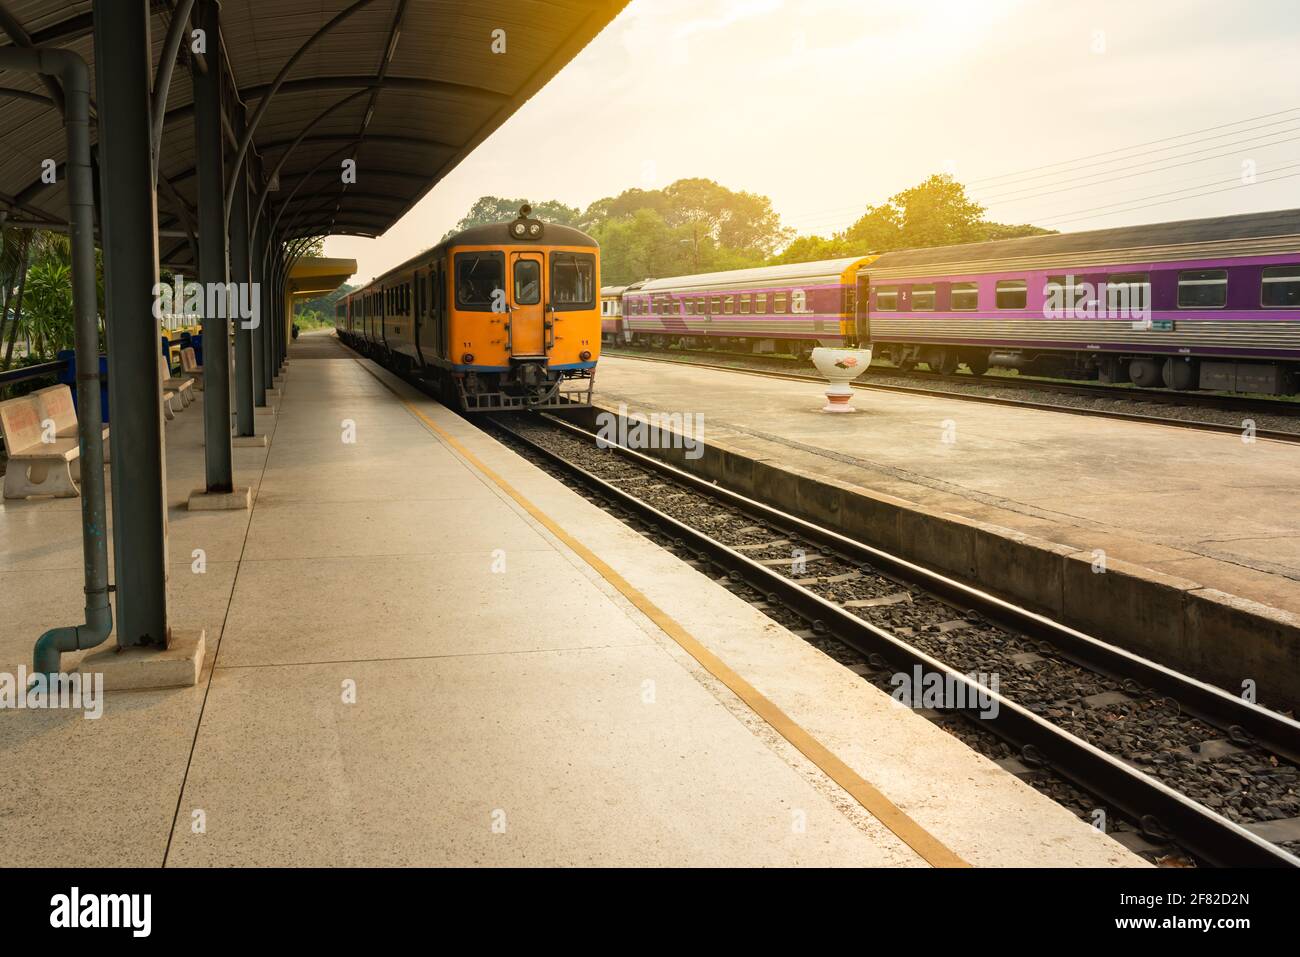 Thai local train on railway at sunset. Stock Photo